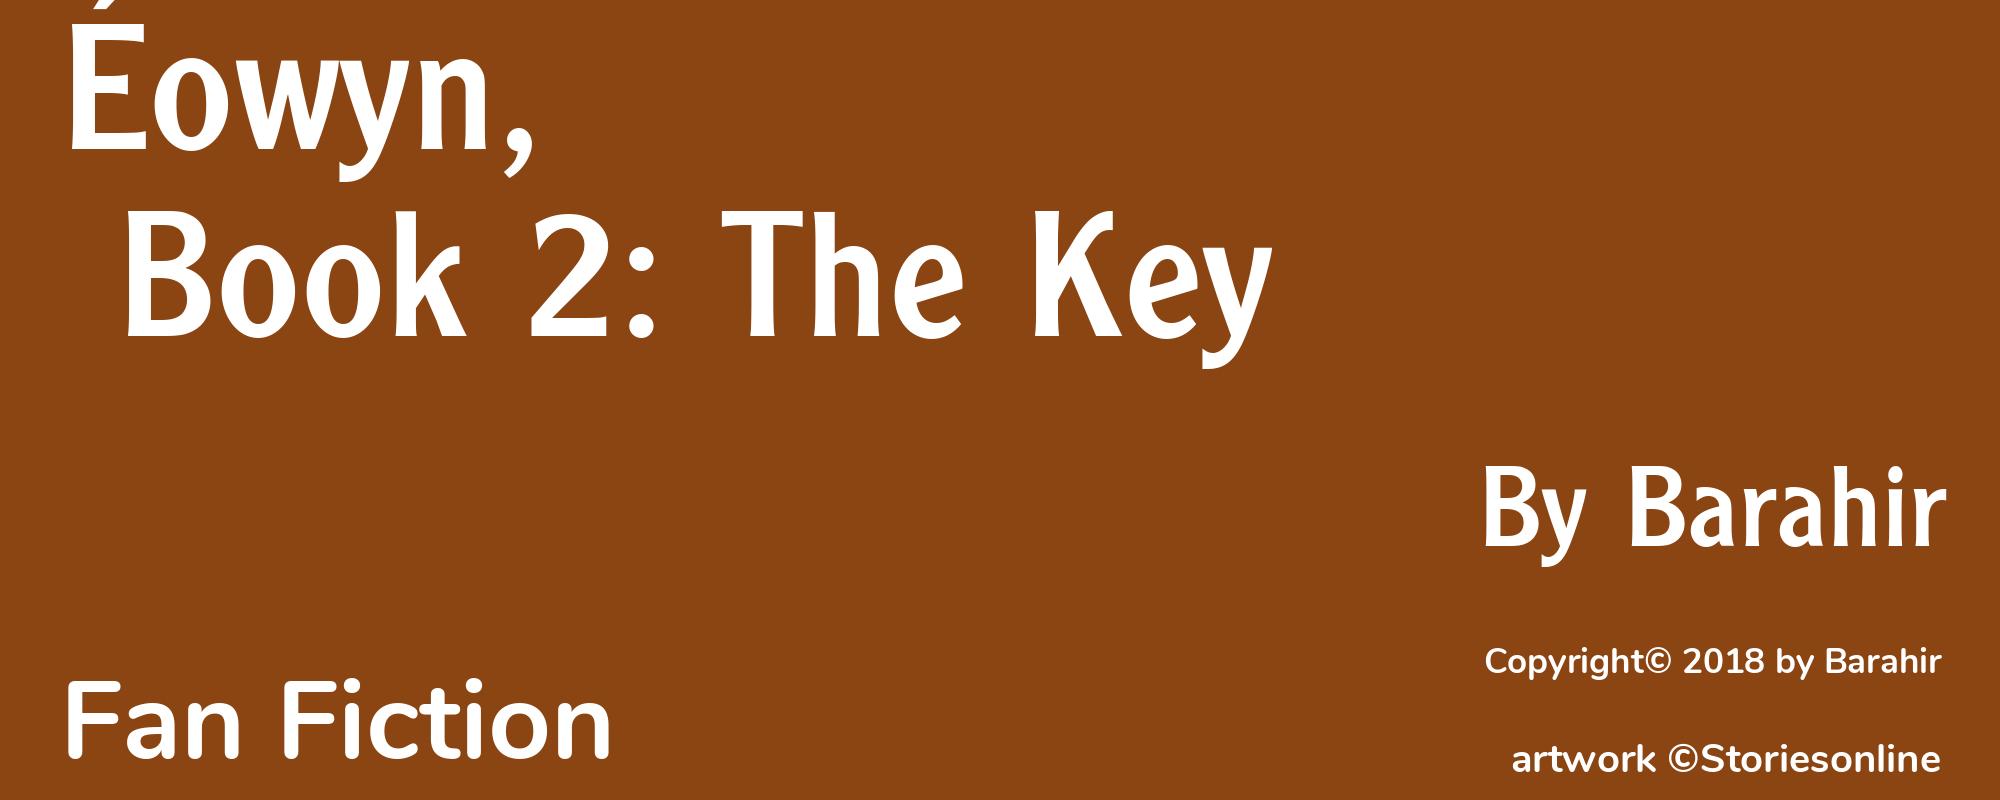 Éowyn, Book 2: The Key - Cover